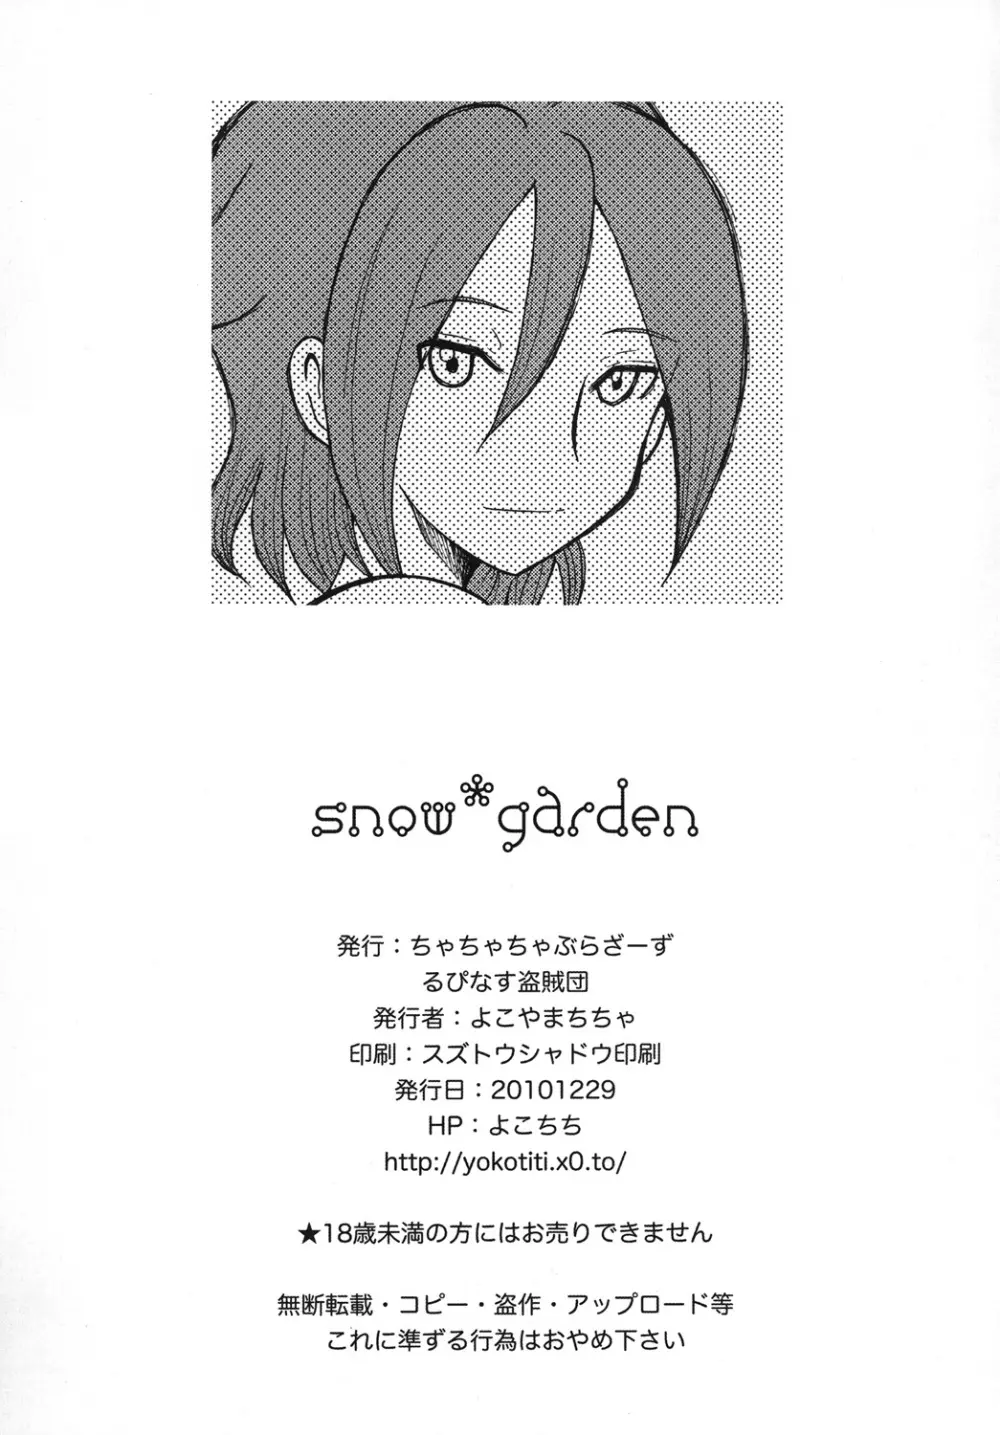 snow*garden - page24